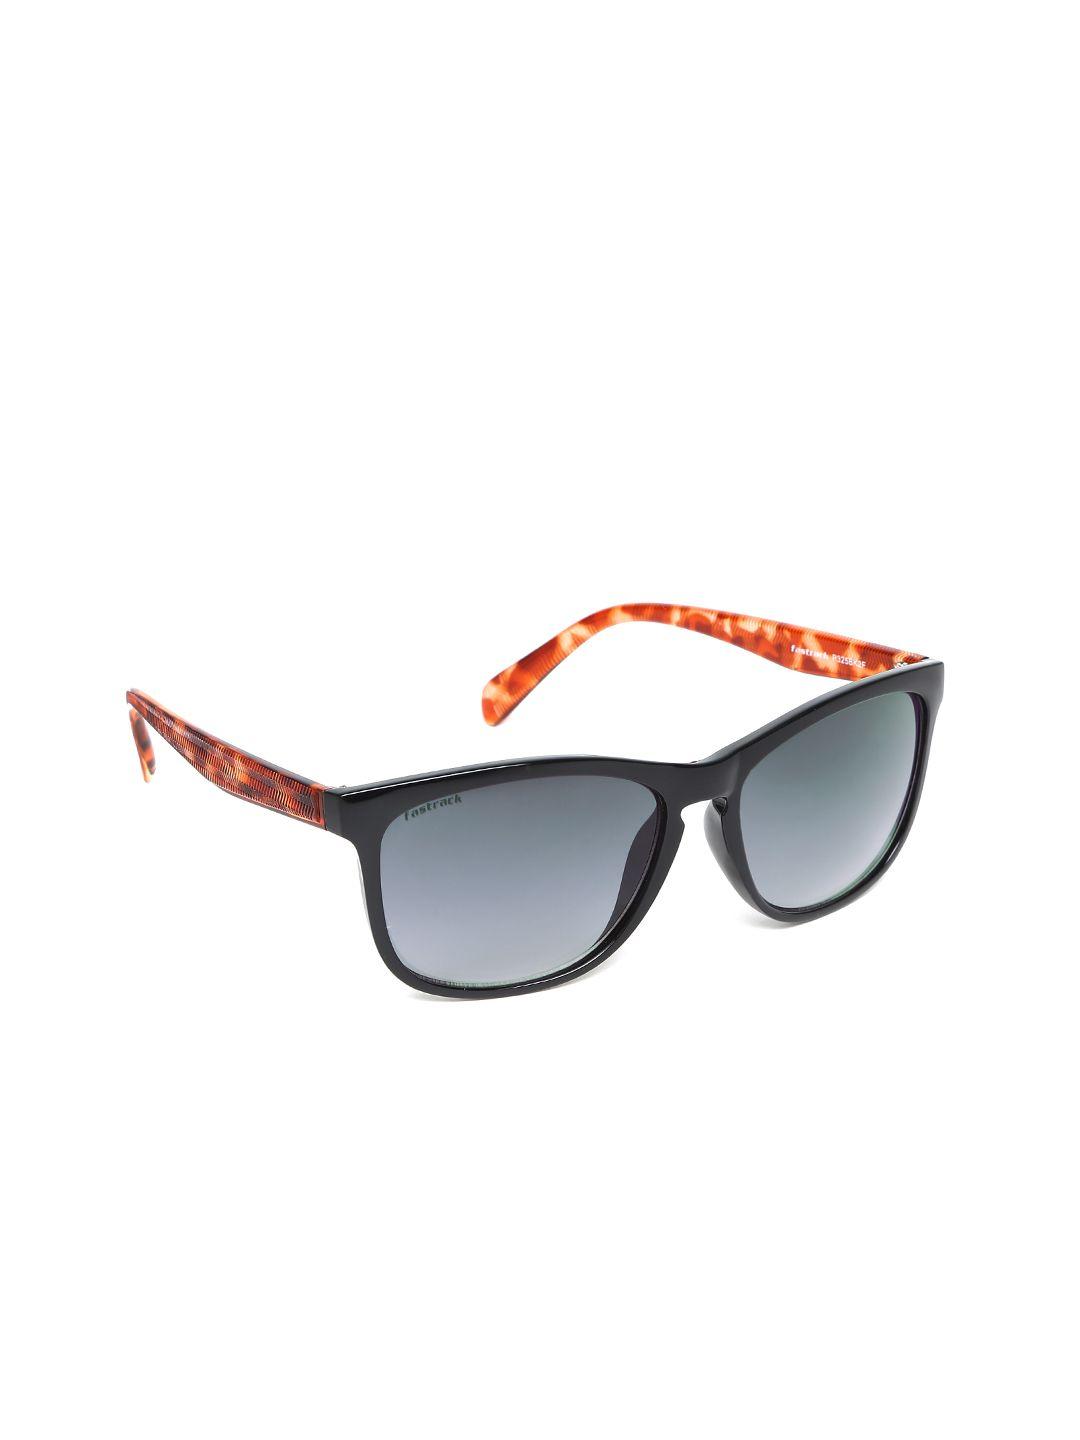 fastrack-women-gradient-sunglasses-p325bk2f